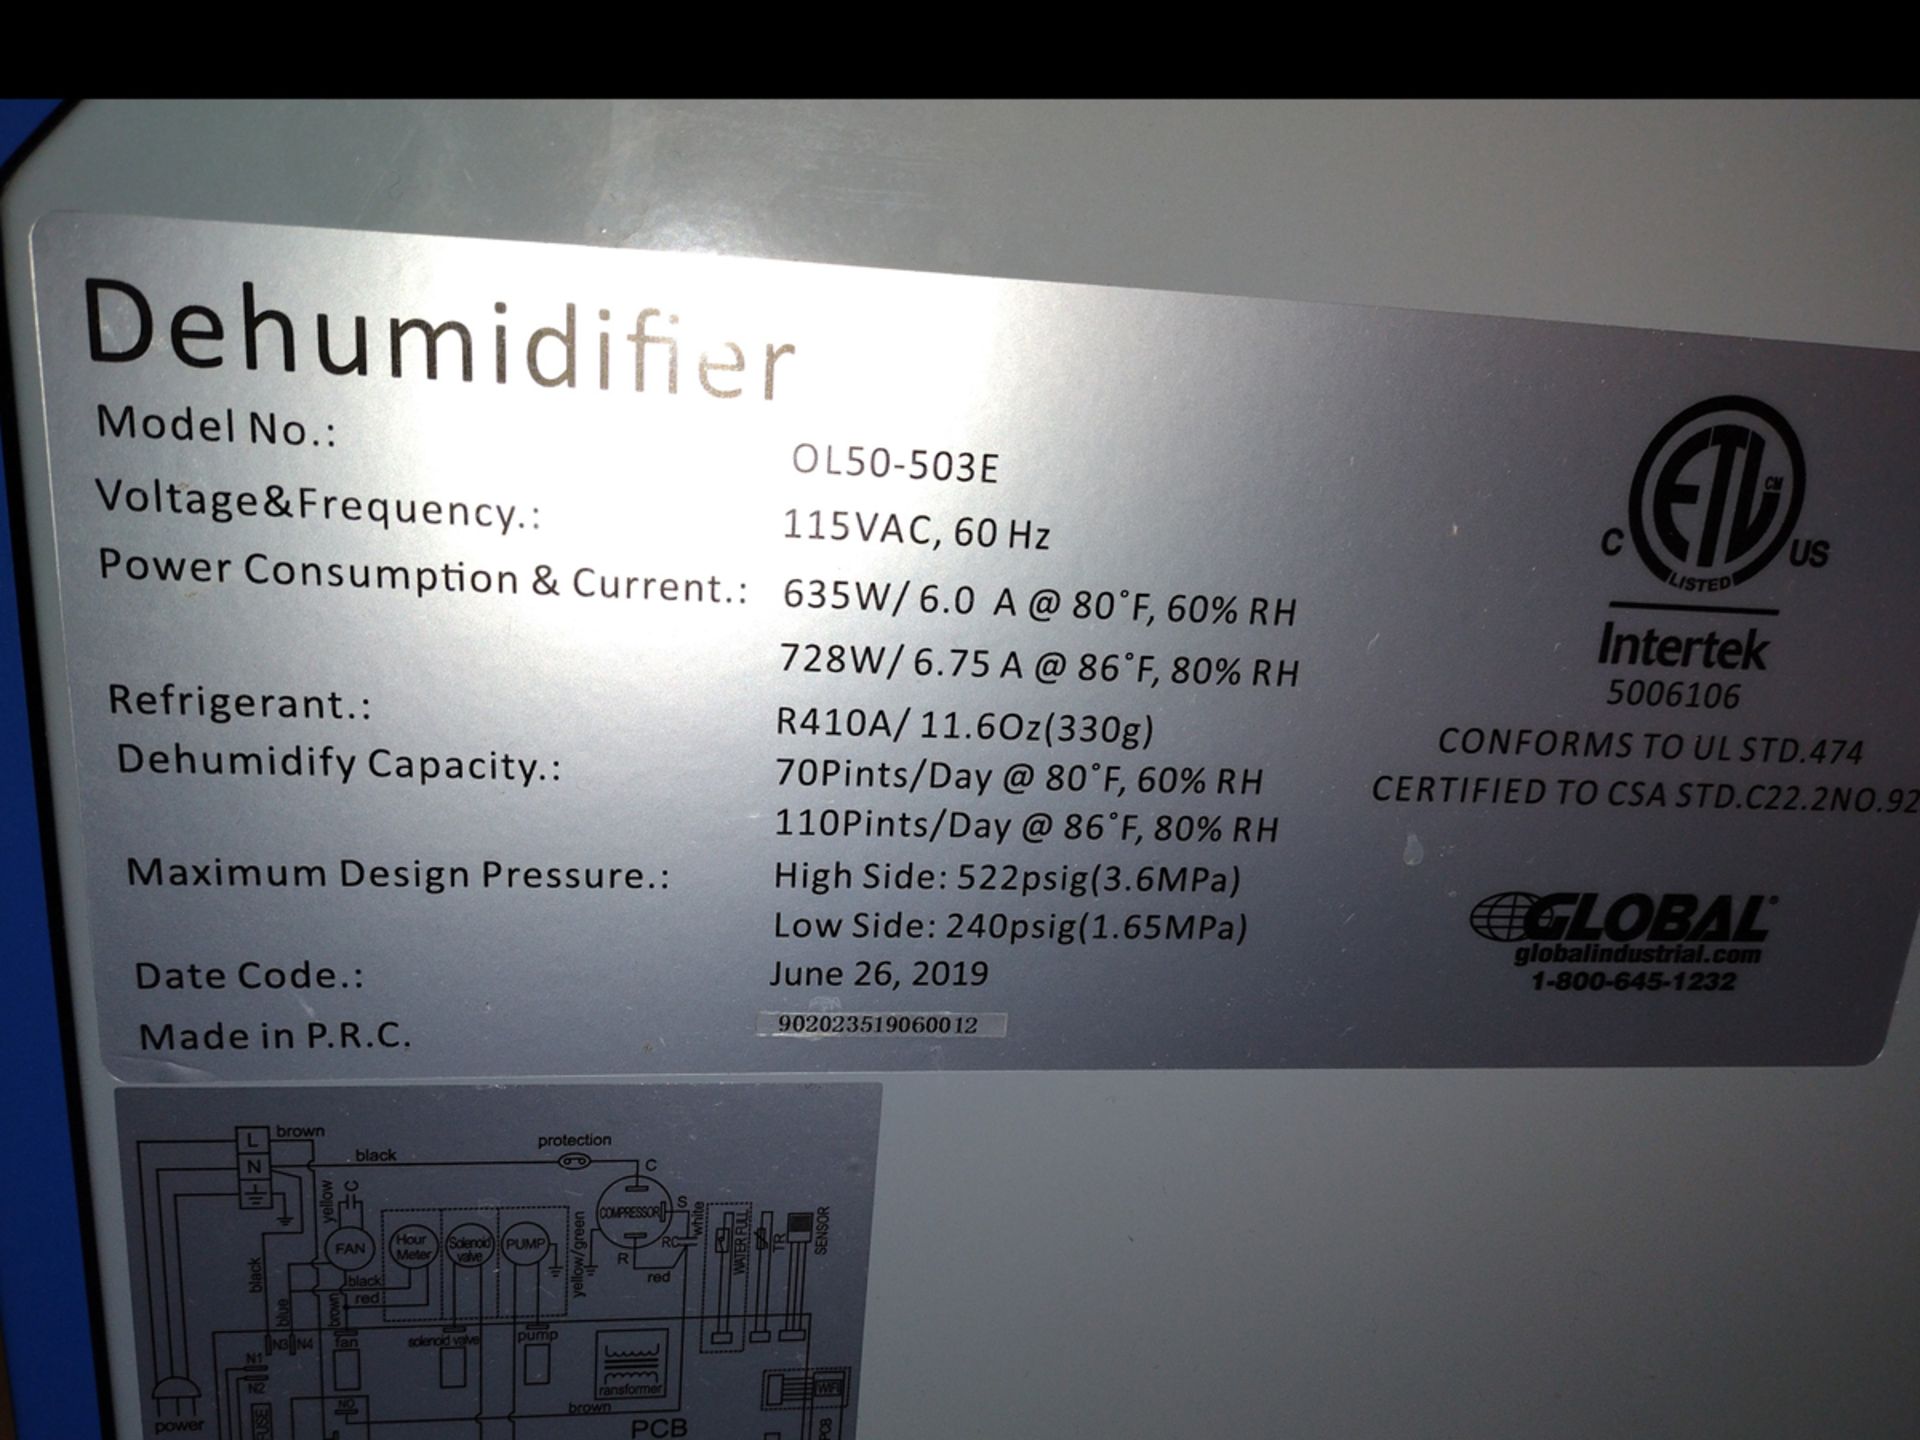 Global OL50-503E Commercial Dehumidifier - Image 4 of 4